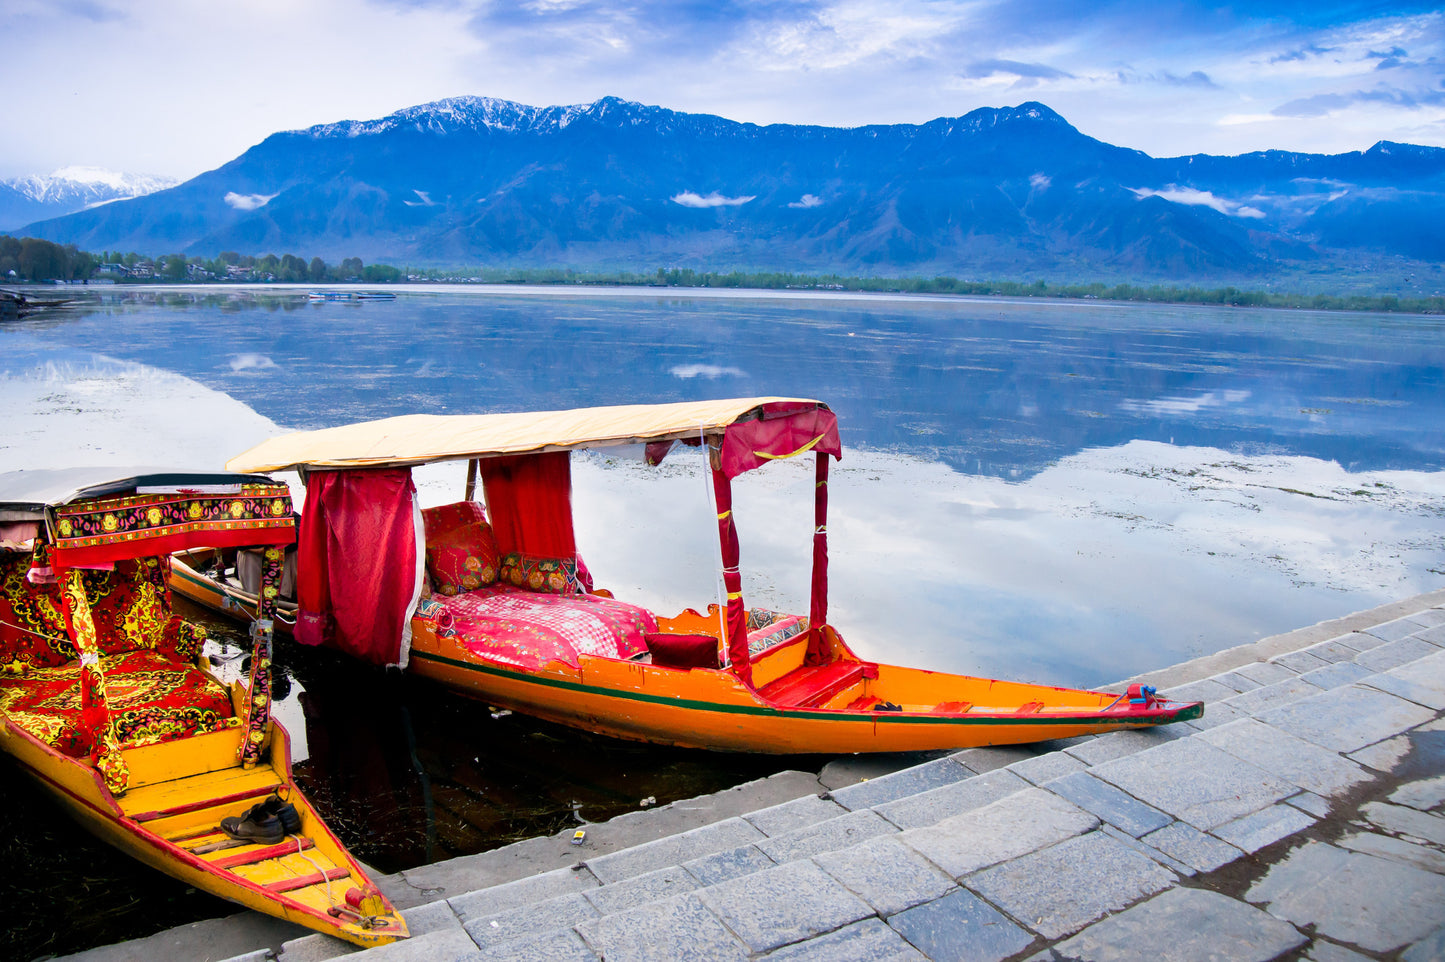 Kashmir Houseboat (2 nights / 3 days) - Stay in premium houseboat & Srinagar sightseeing.